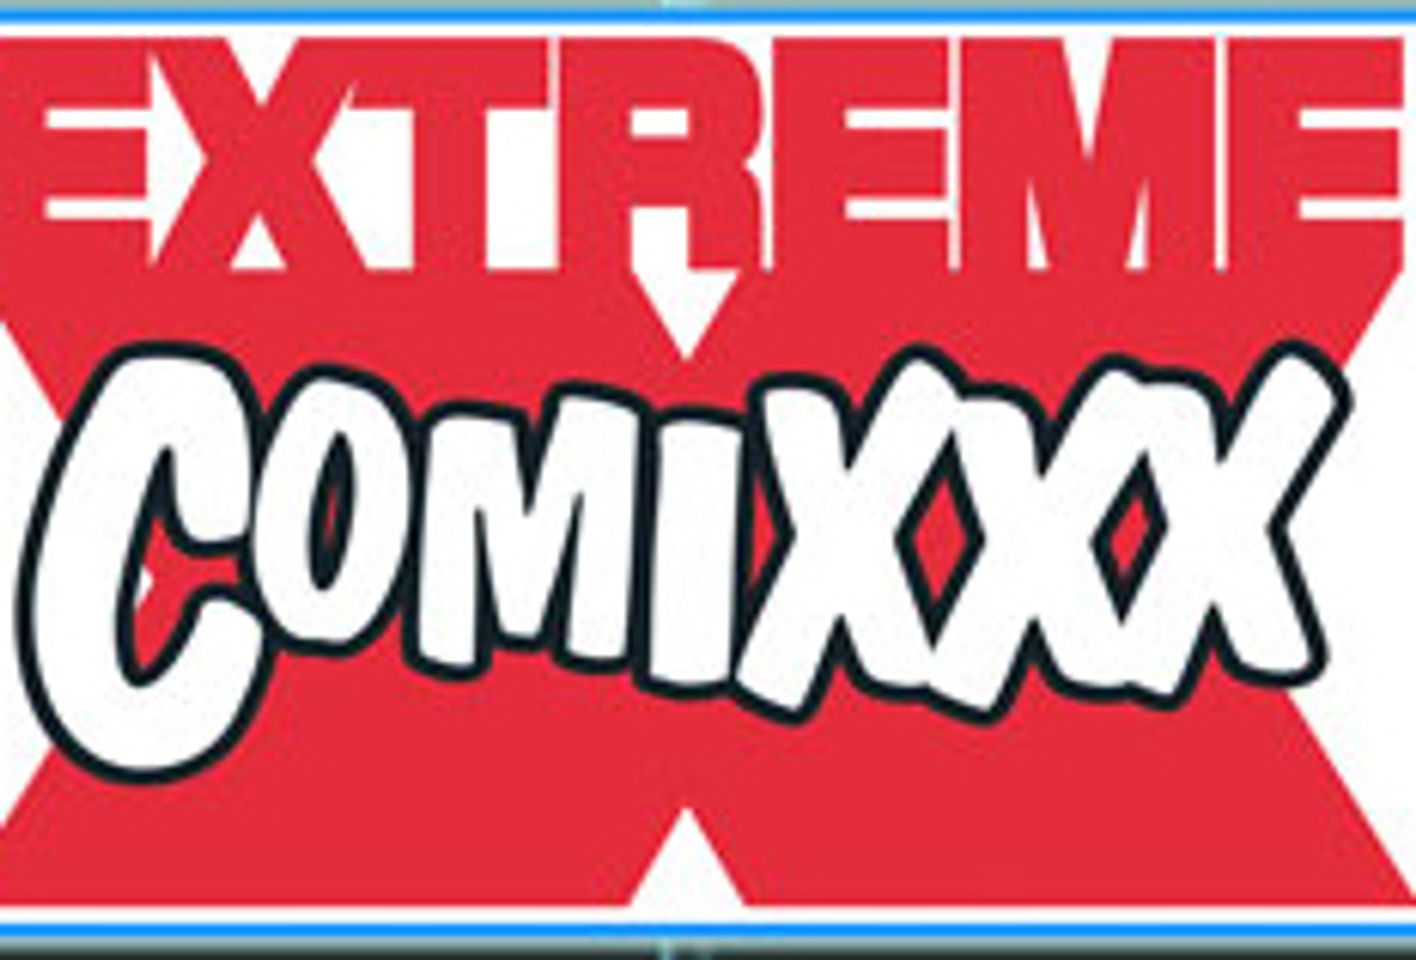 Extreme Comixxx Receives AVN's 2012 Best New Line Award